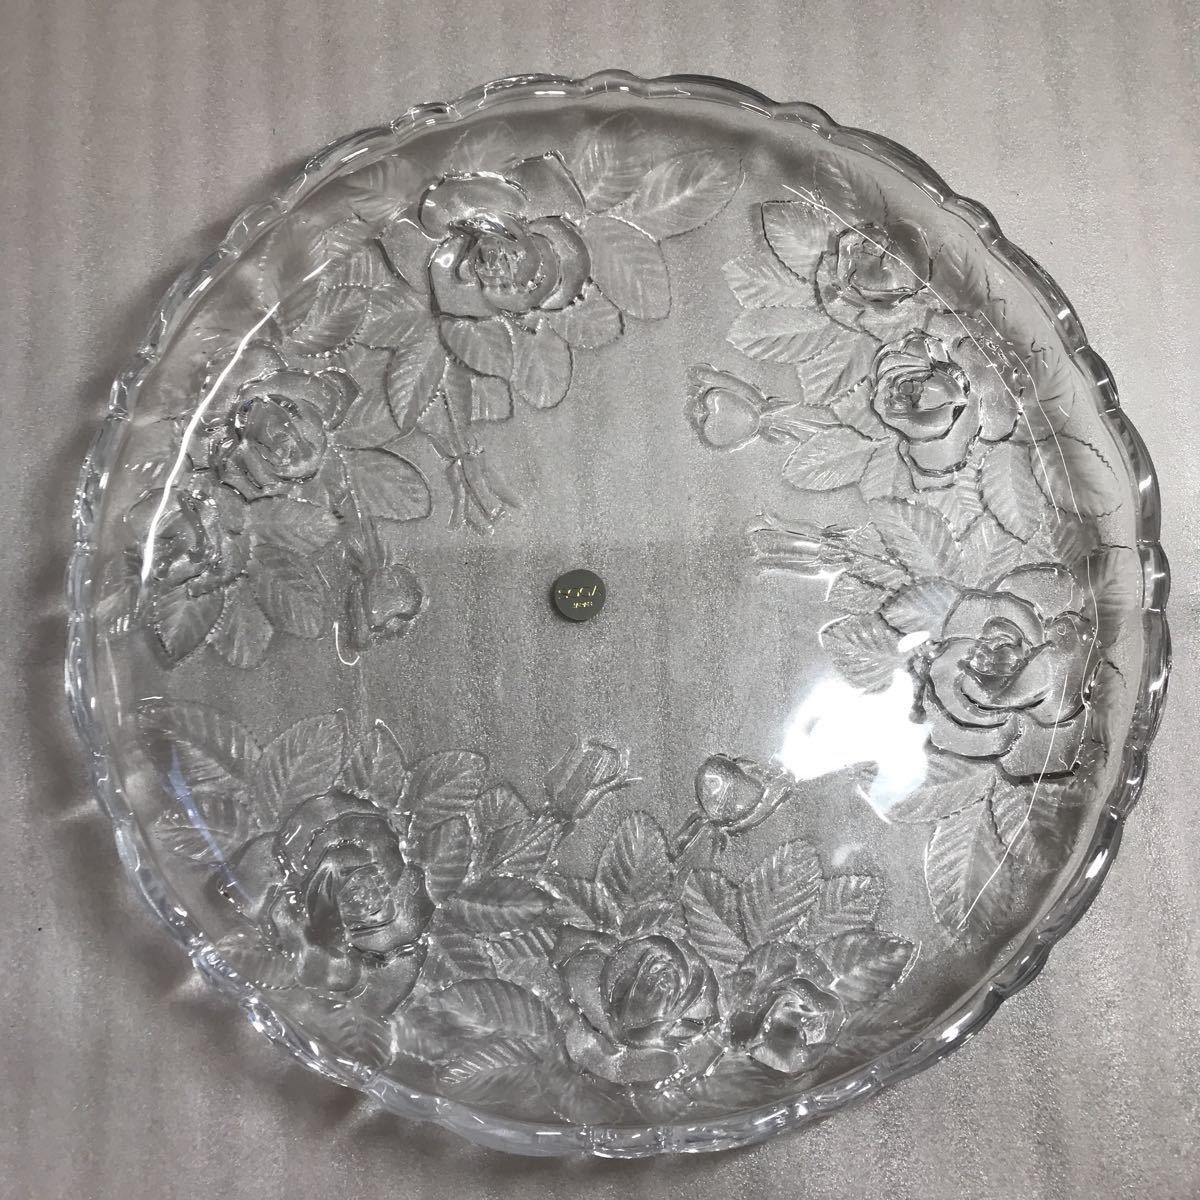 SOGA 昭和レトロ クリスタルガラス 皿 大皿 花柄 バラ柄 直径約36㎝ 美品 中古品_画像1